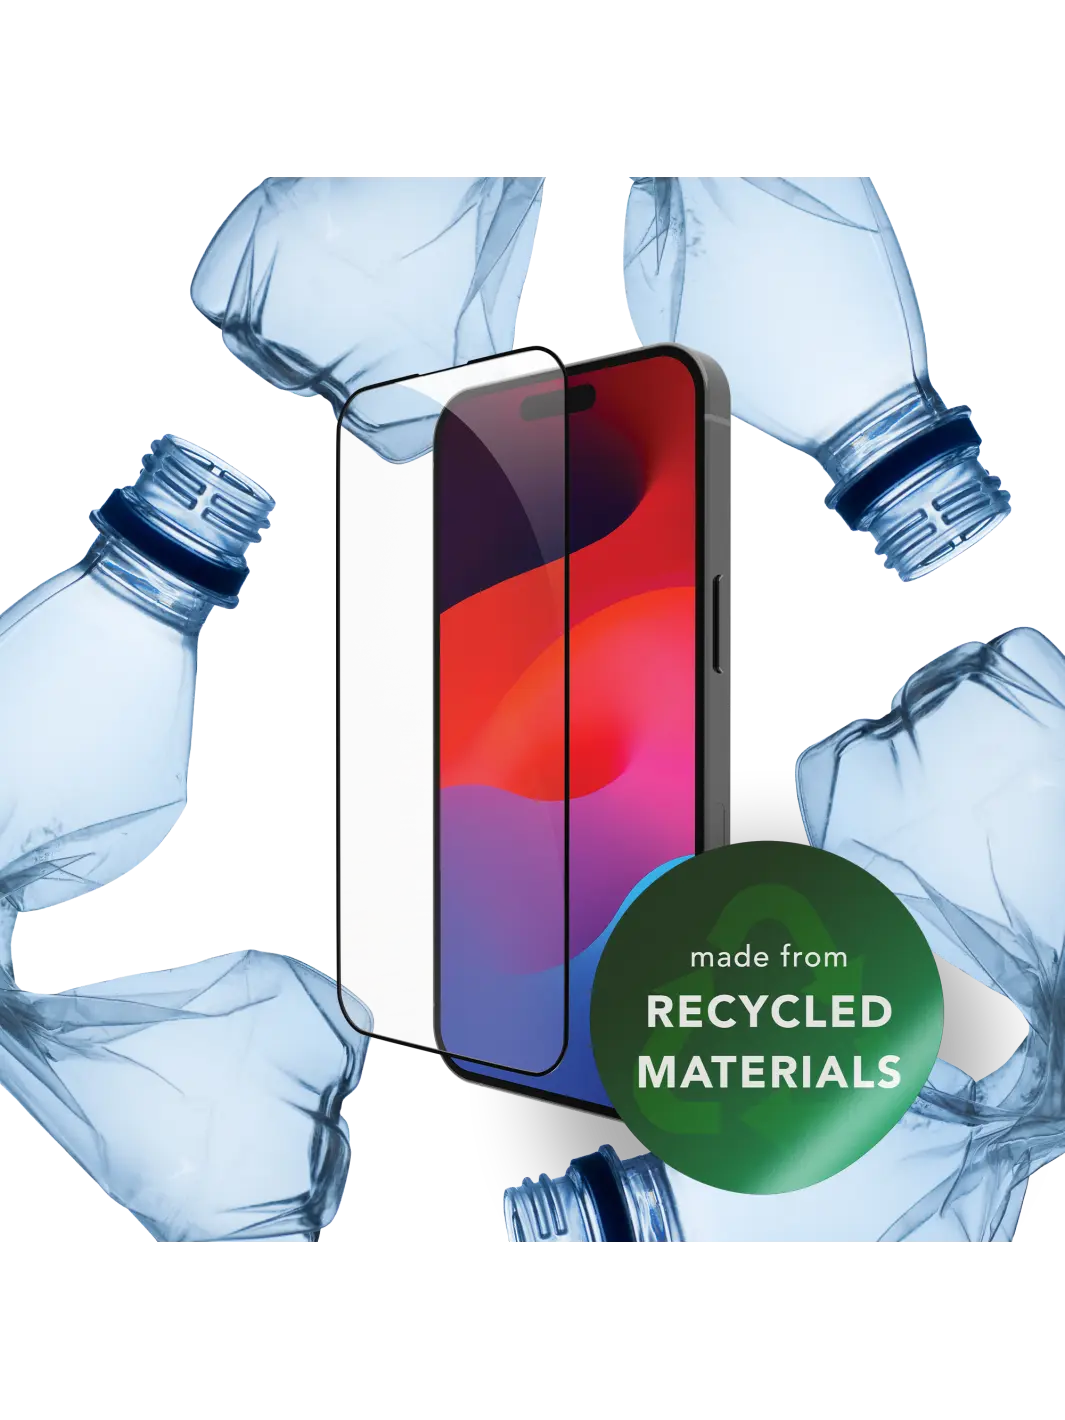 eco-shield - Phones